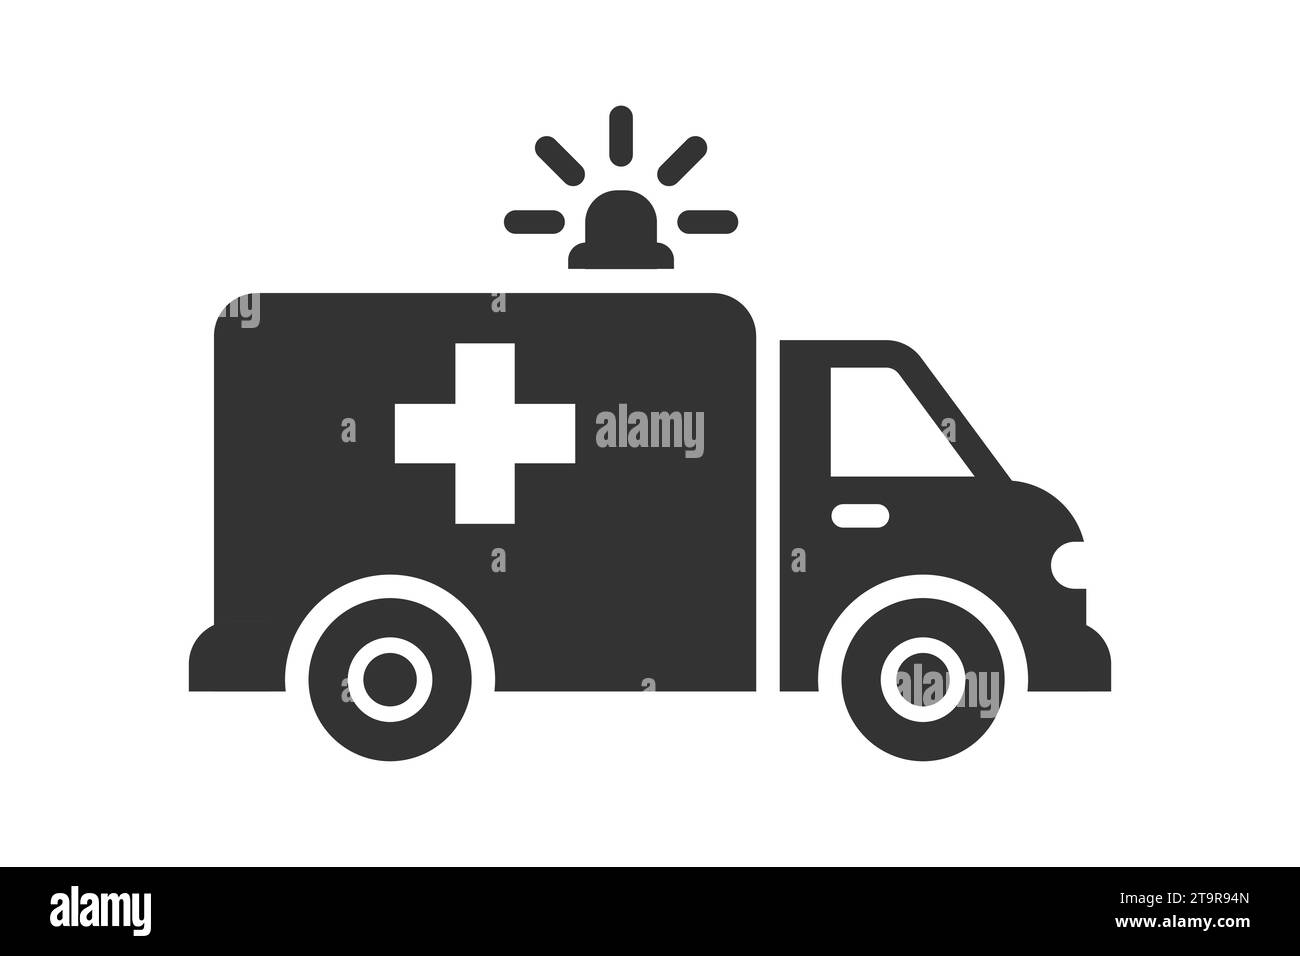 Ambulance car icon. Vector illustration Stock Vector